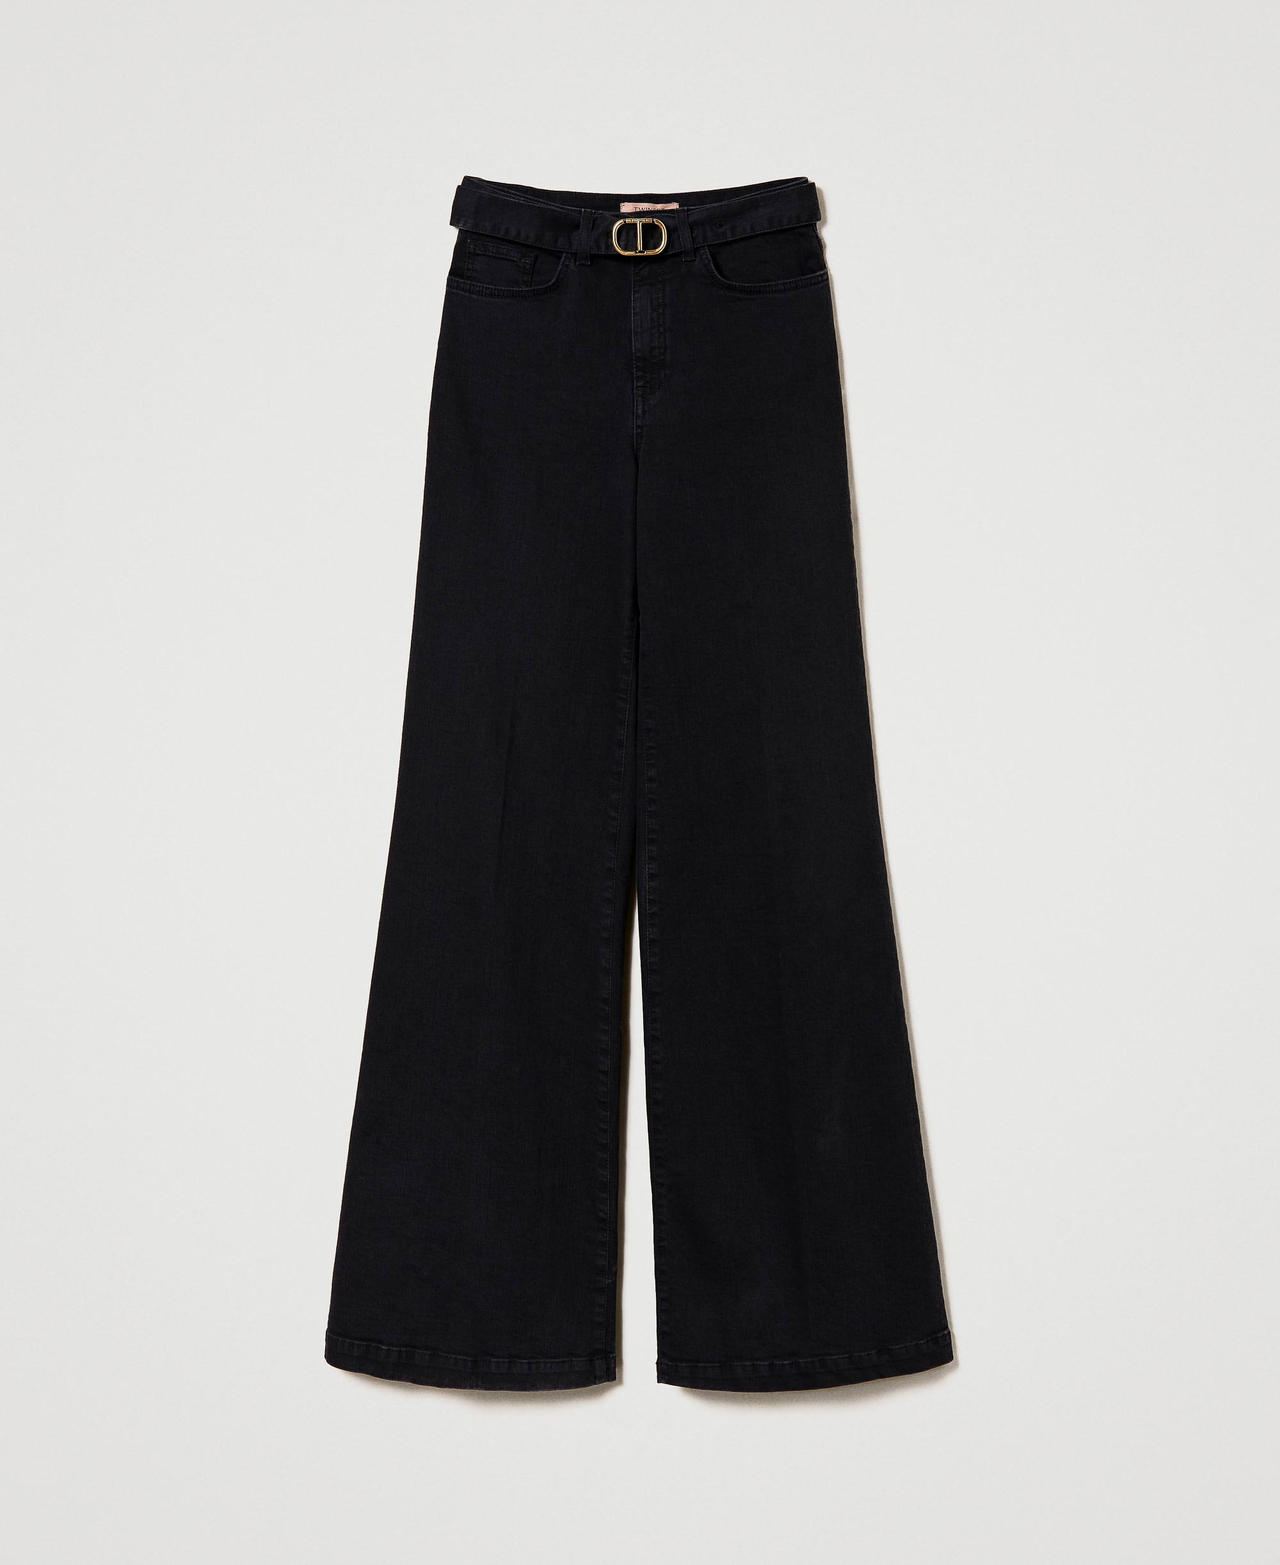 Wide leg black jeans with belt Black Denim Woman 232TT2430-0S